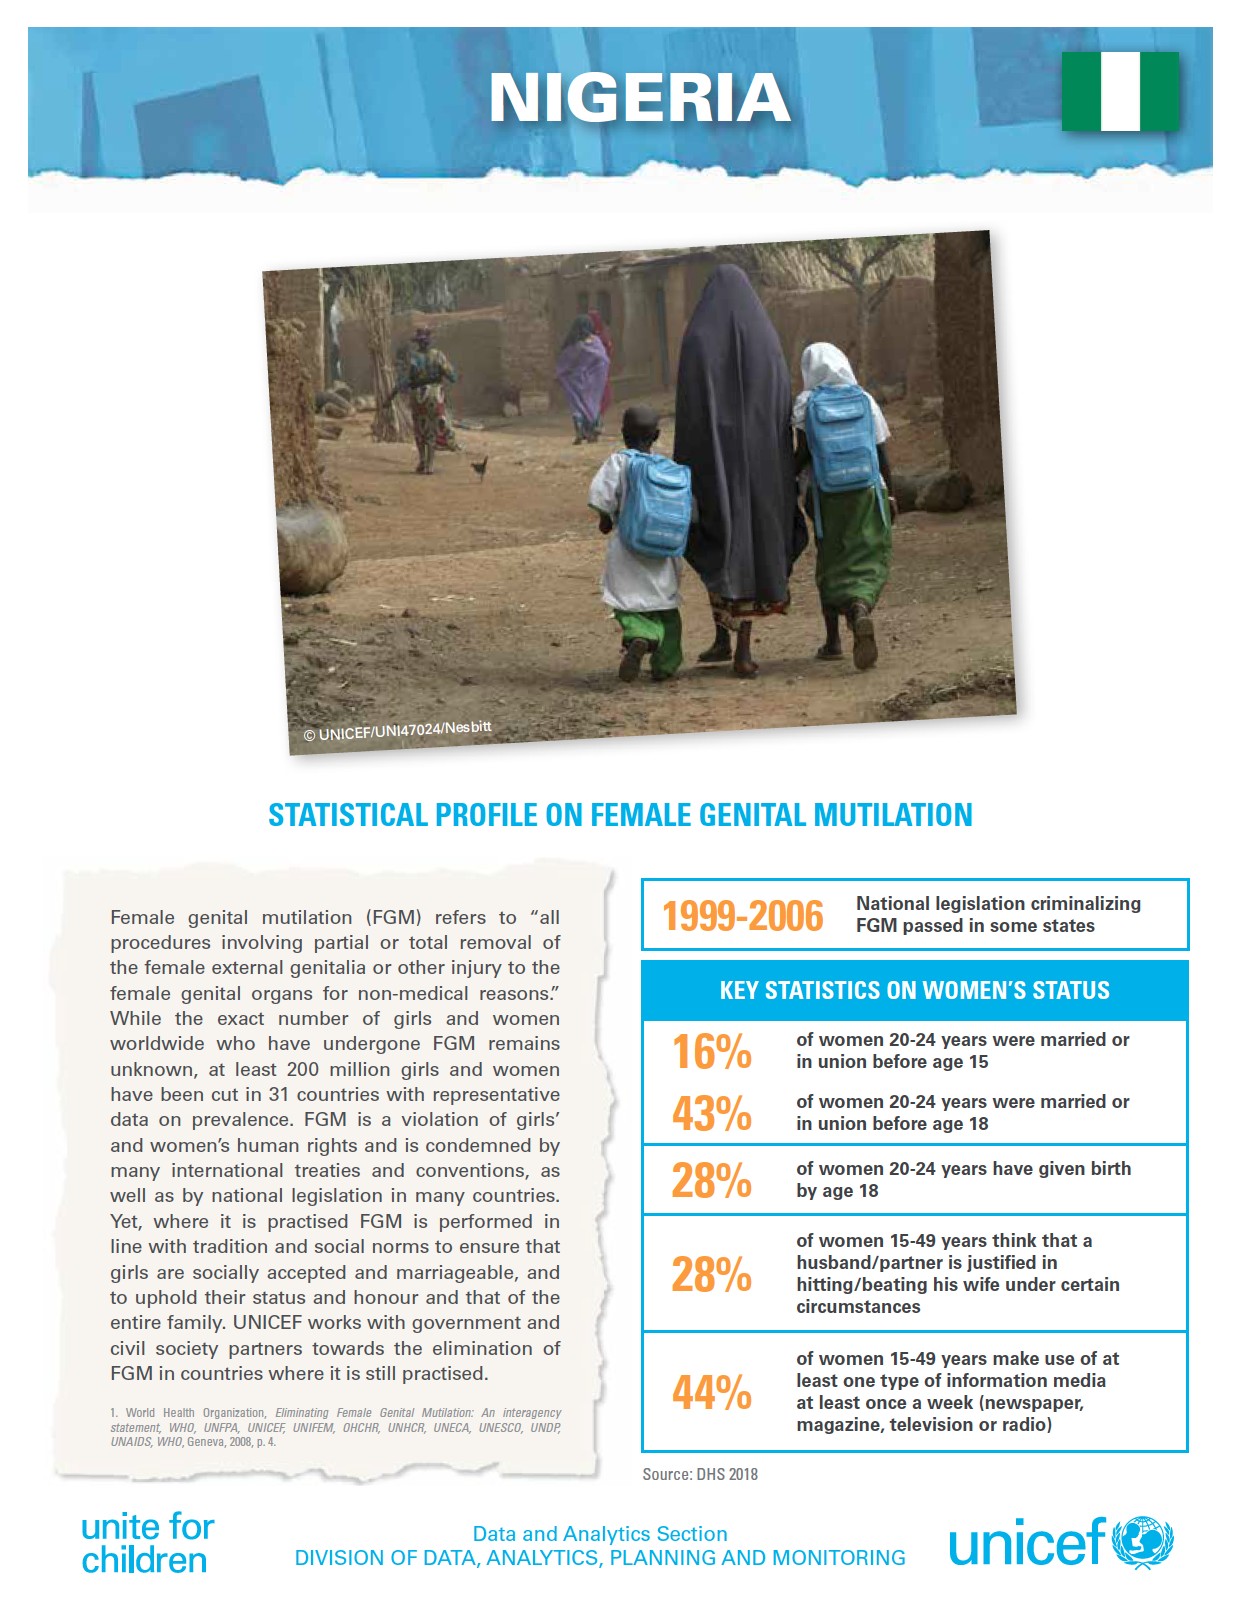 UNICEF Profile: FGM in Nigeria (2020)